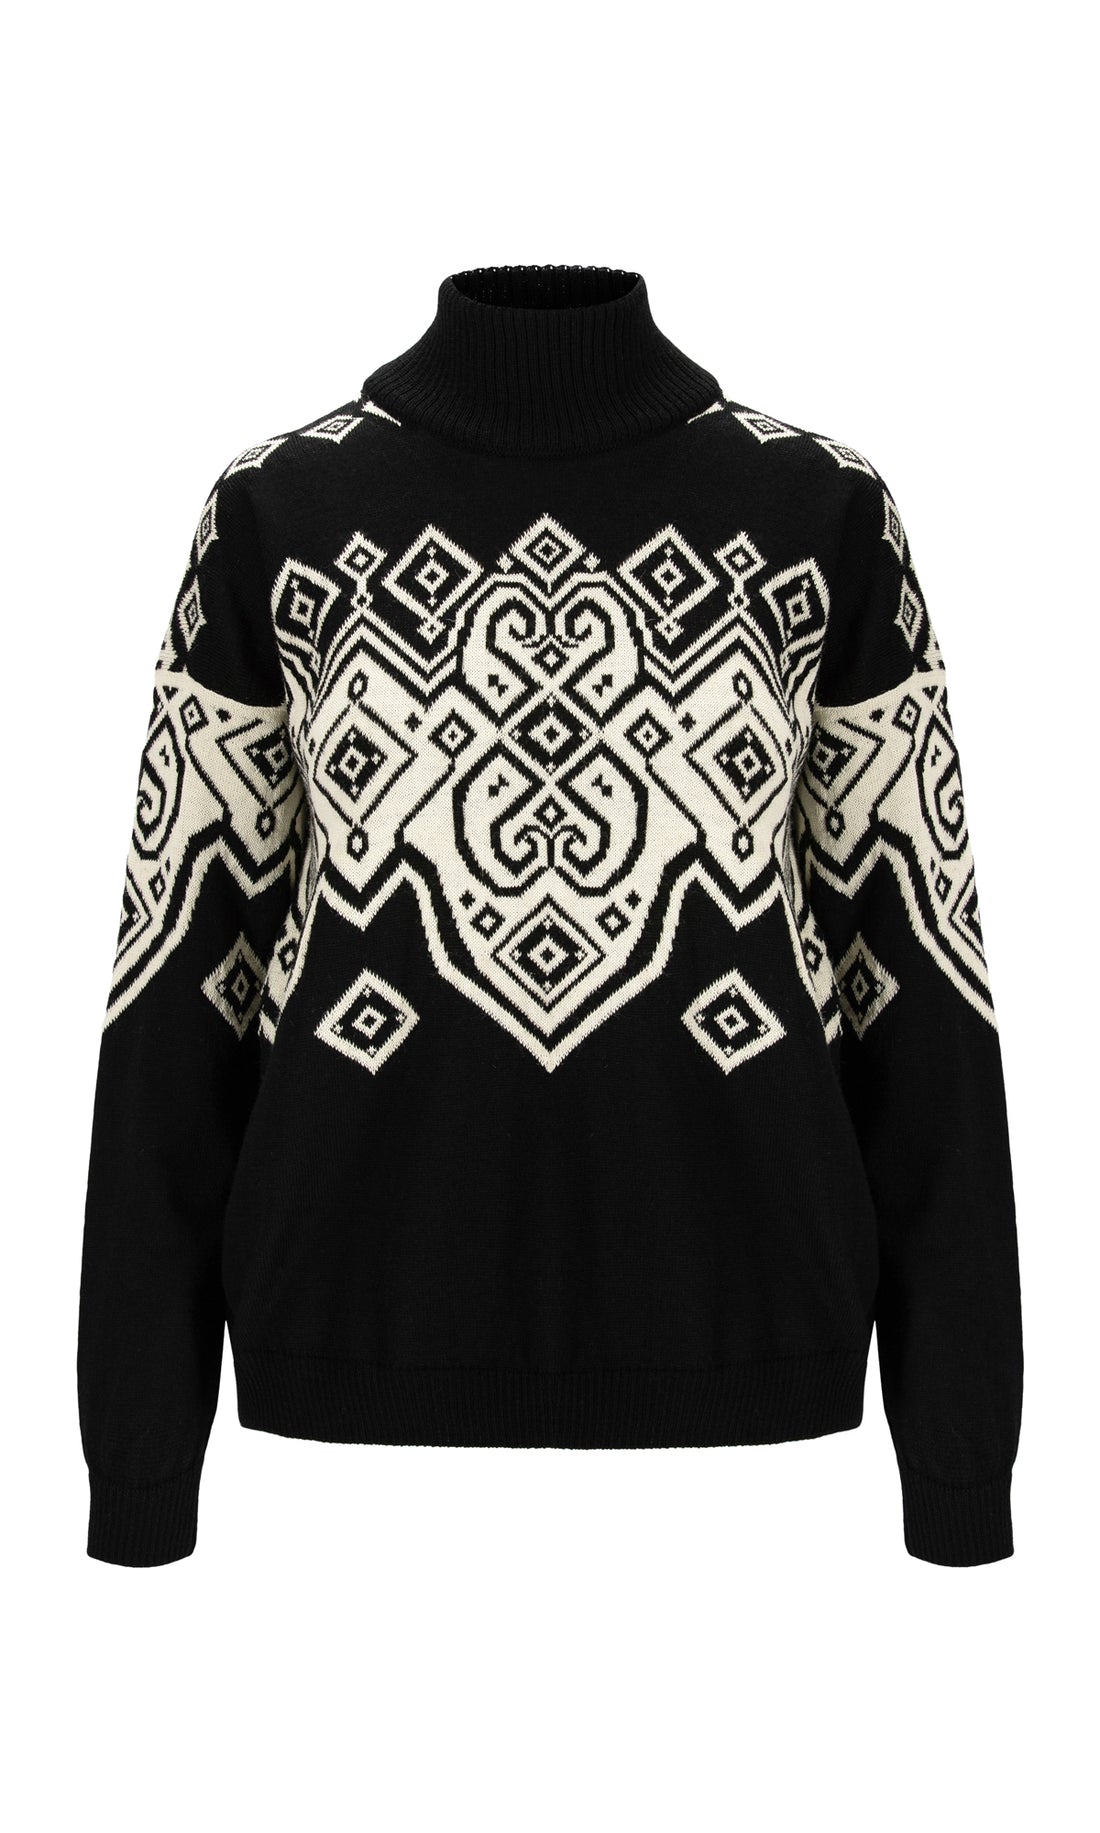 Dale of Norway - Falun Heron Women's Sweater - Black